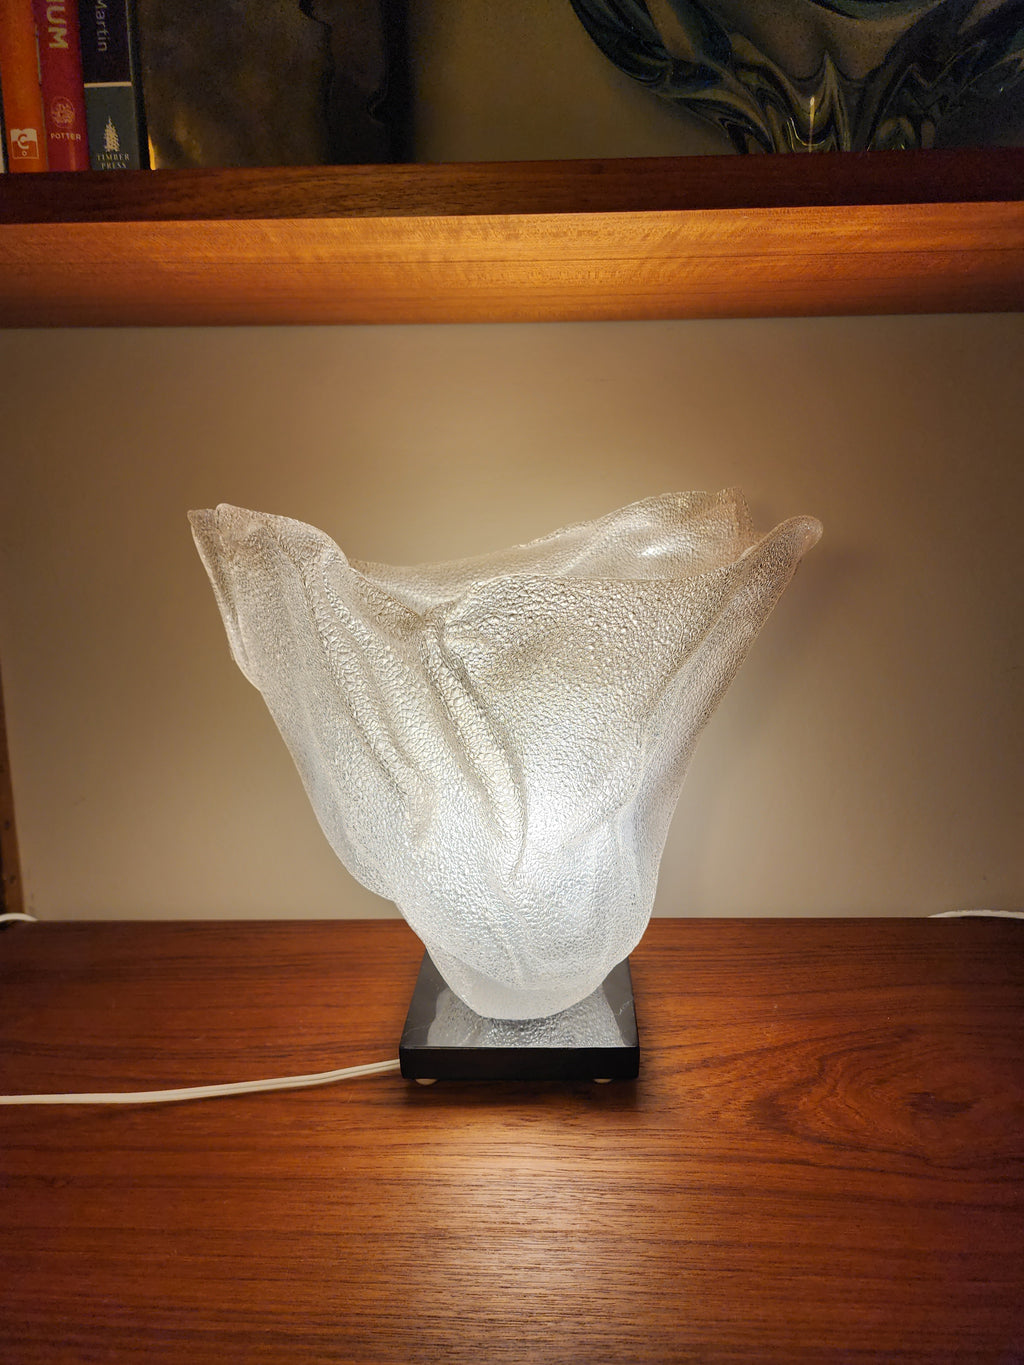 Acrylic Lamp by Gino Robert